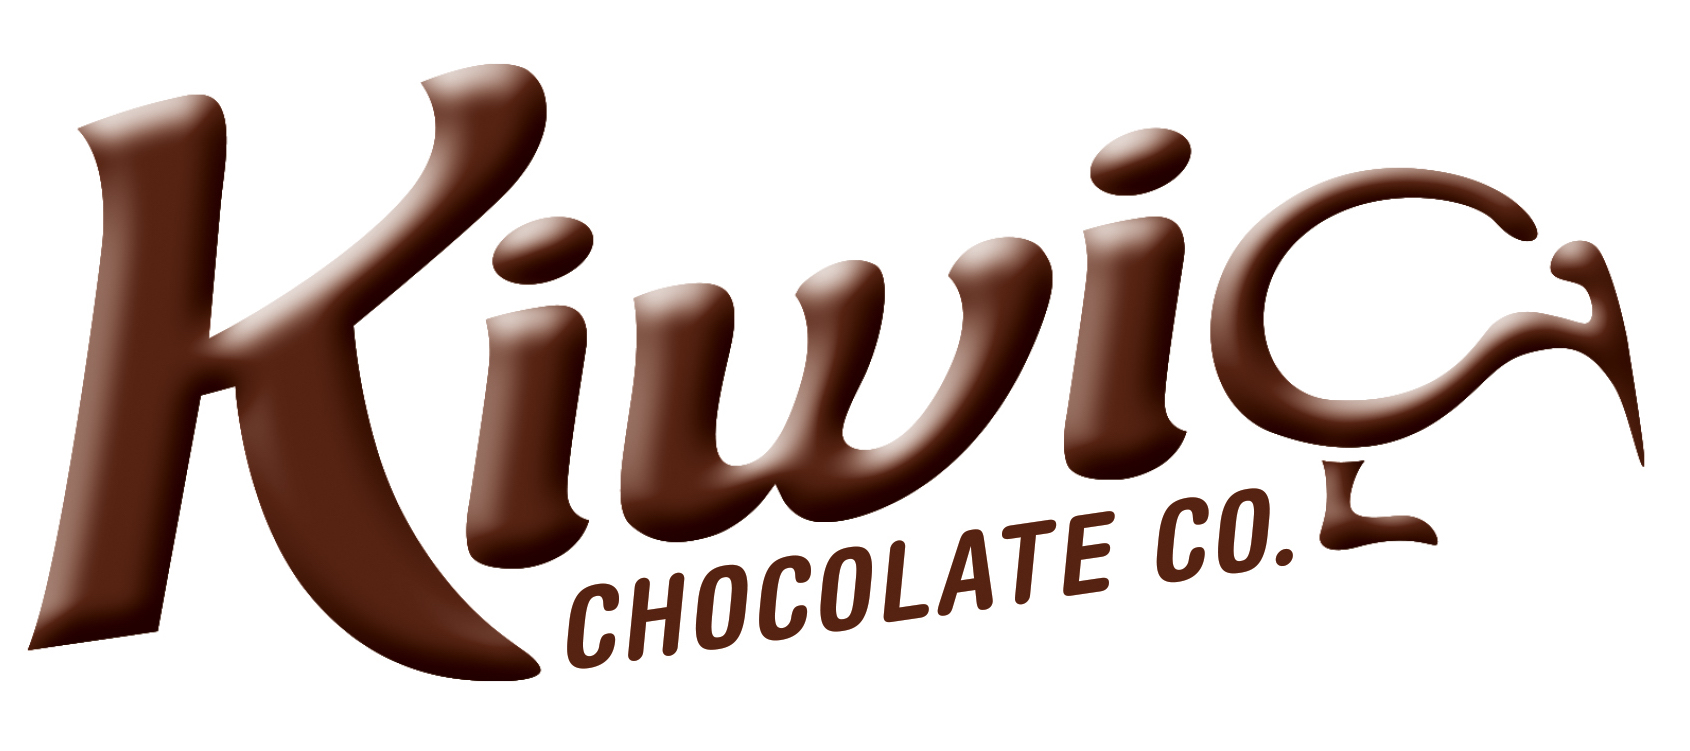 Kiwi Chocolate Co